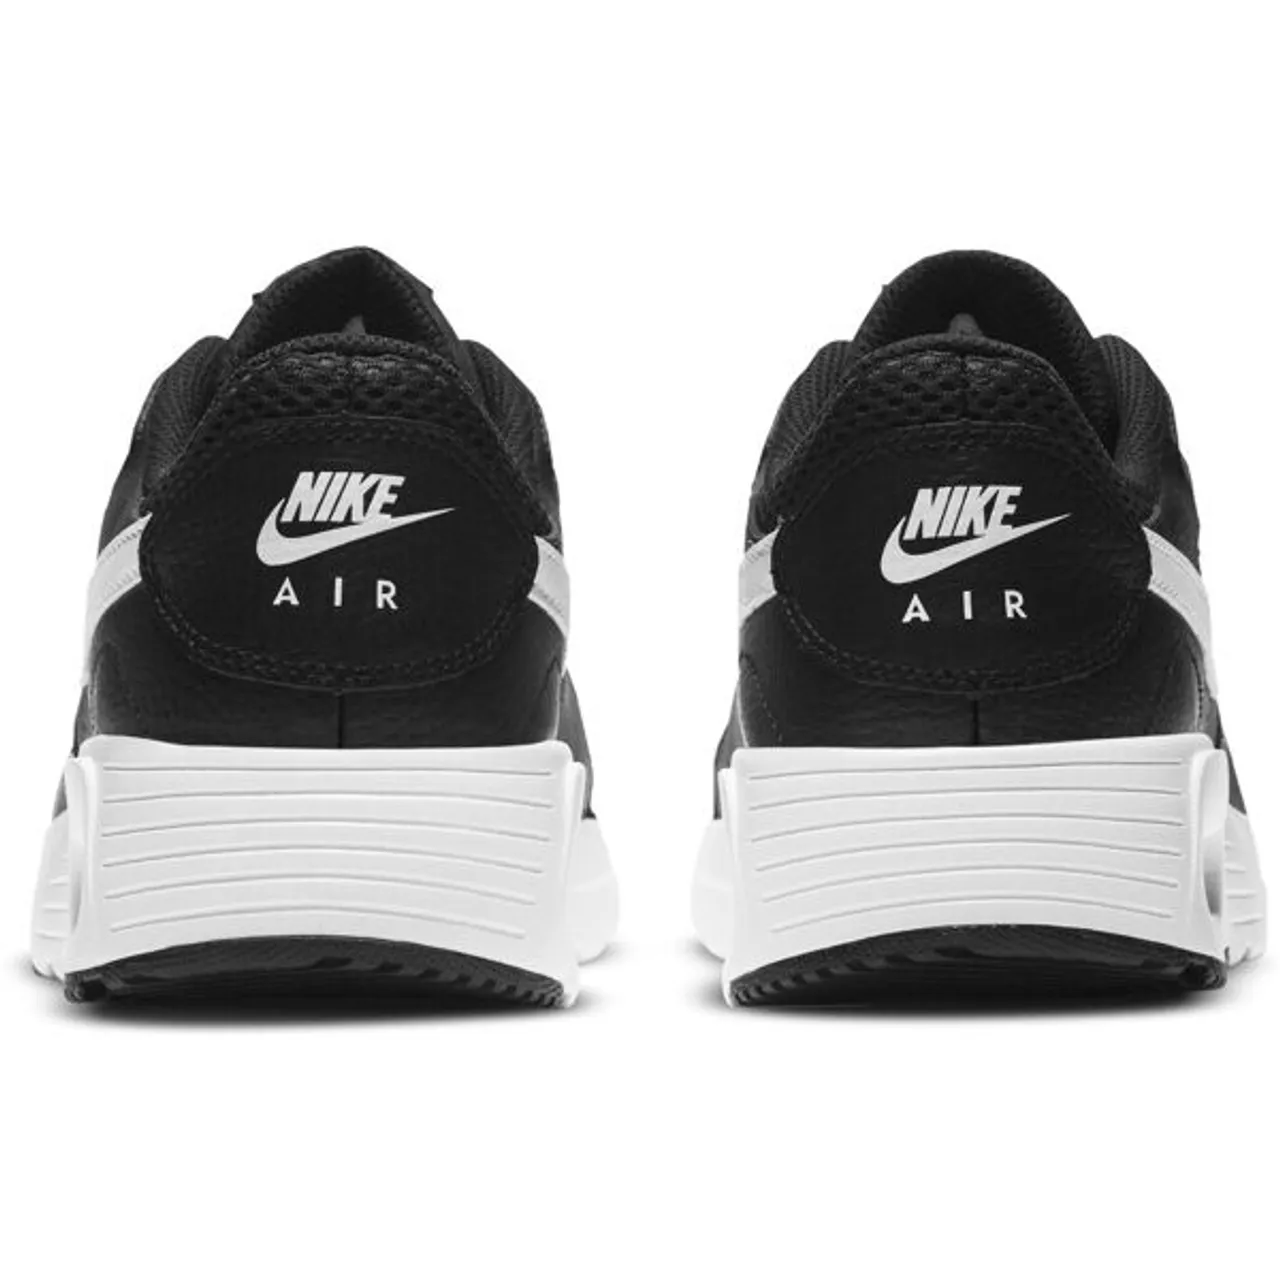 Sneaker NIKE SPORTSWEAR "WMNS AIR MAX SC" Gr. 38, schwarz-weiß (schwarz, weiß) Schuhe Sneaker